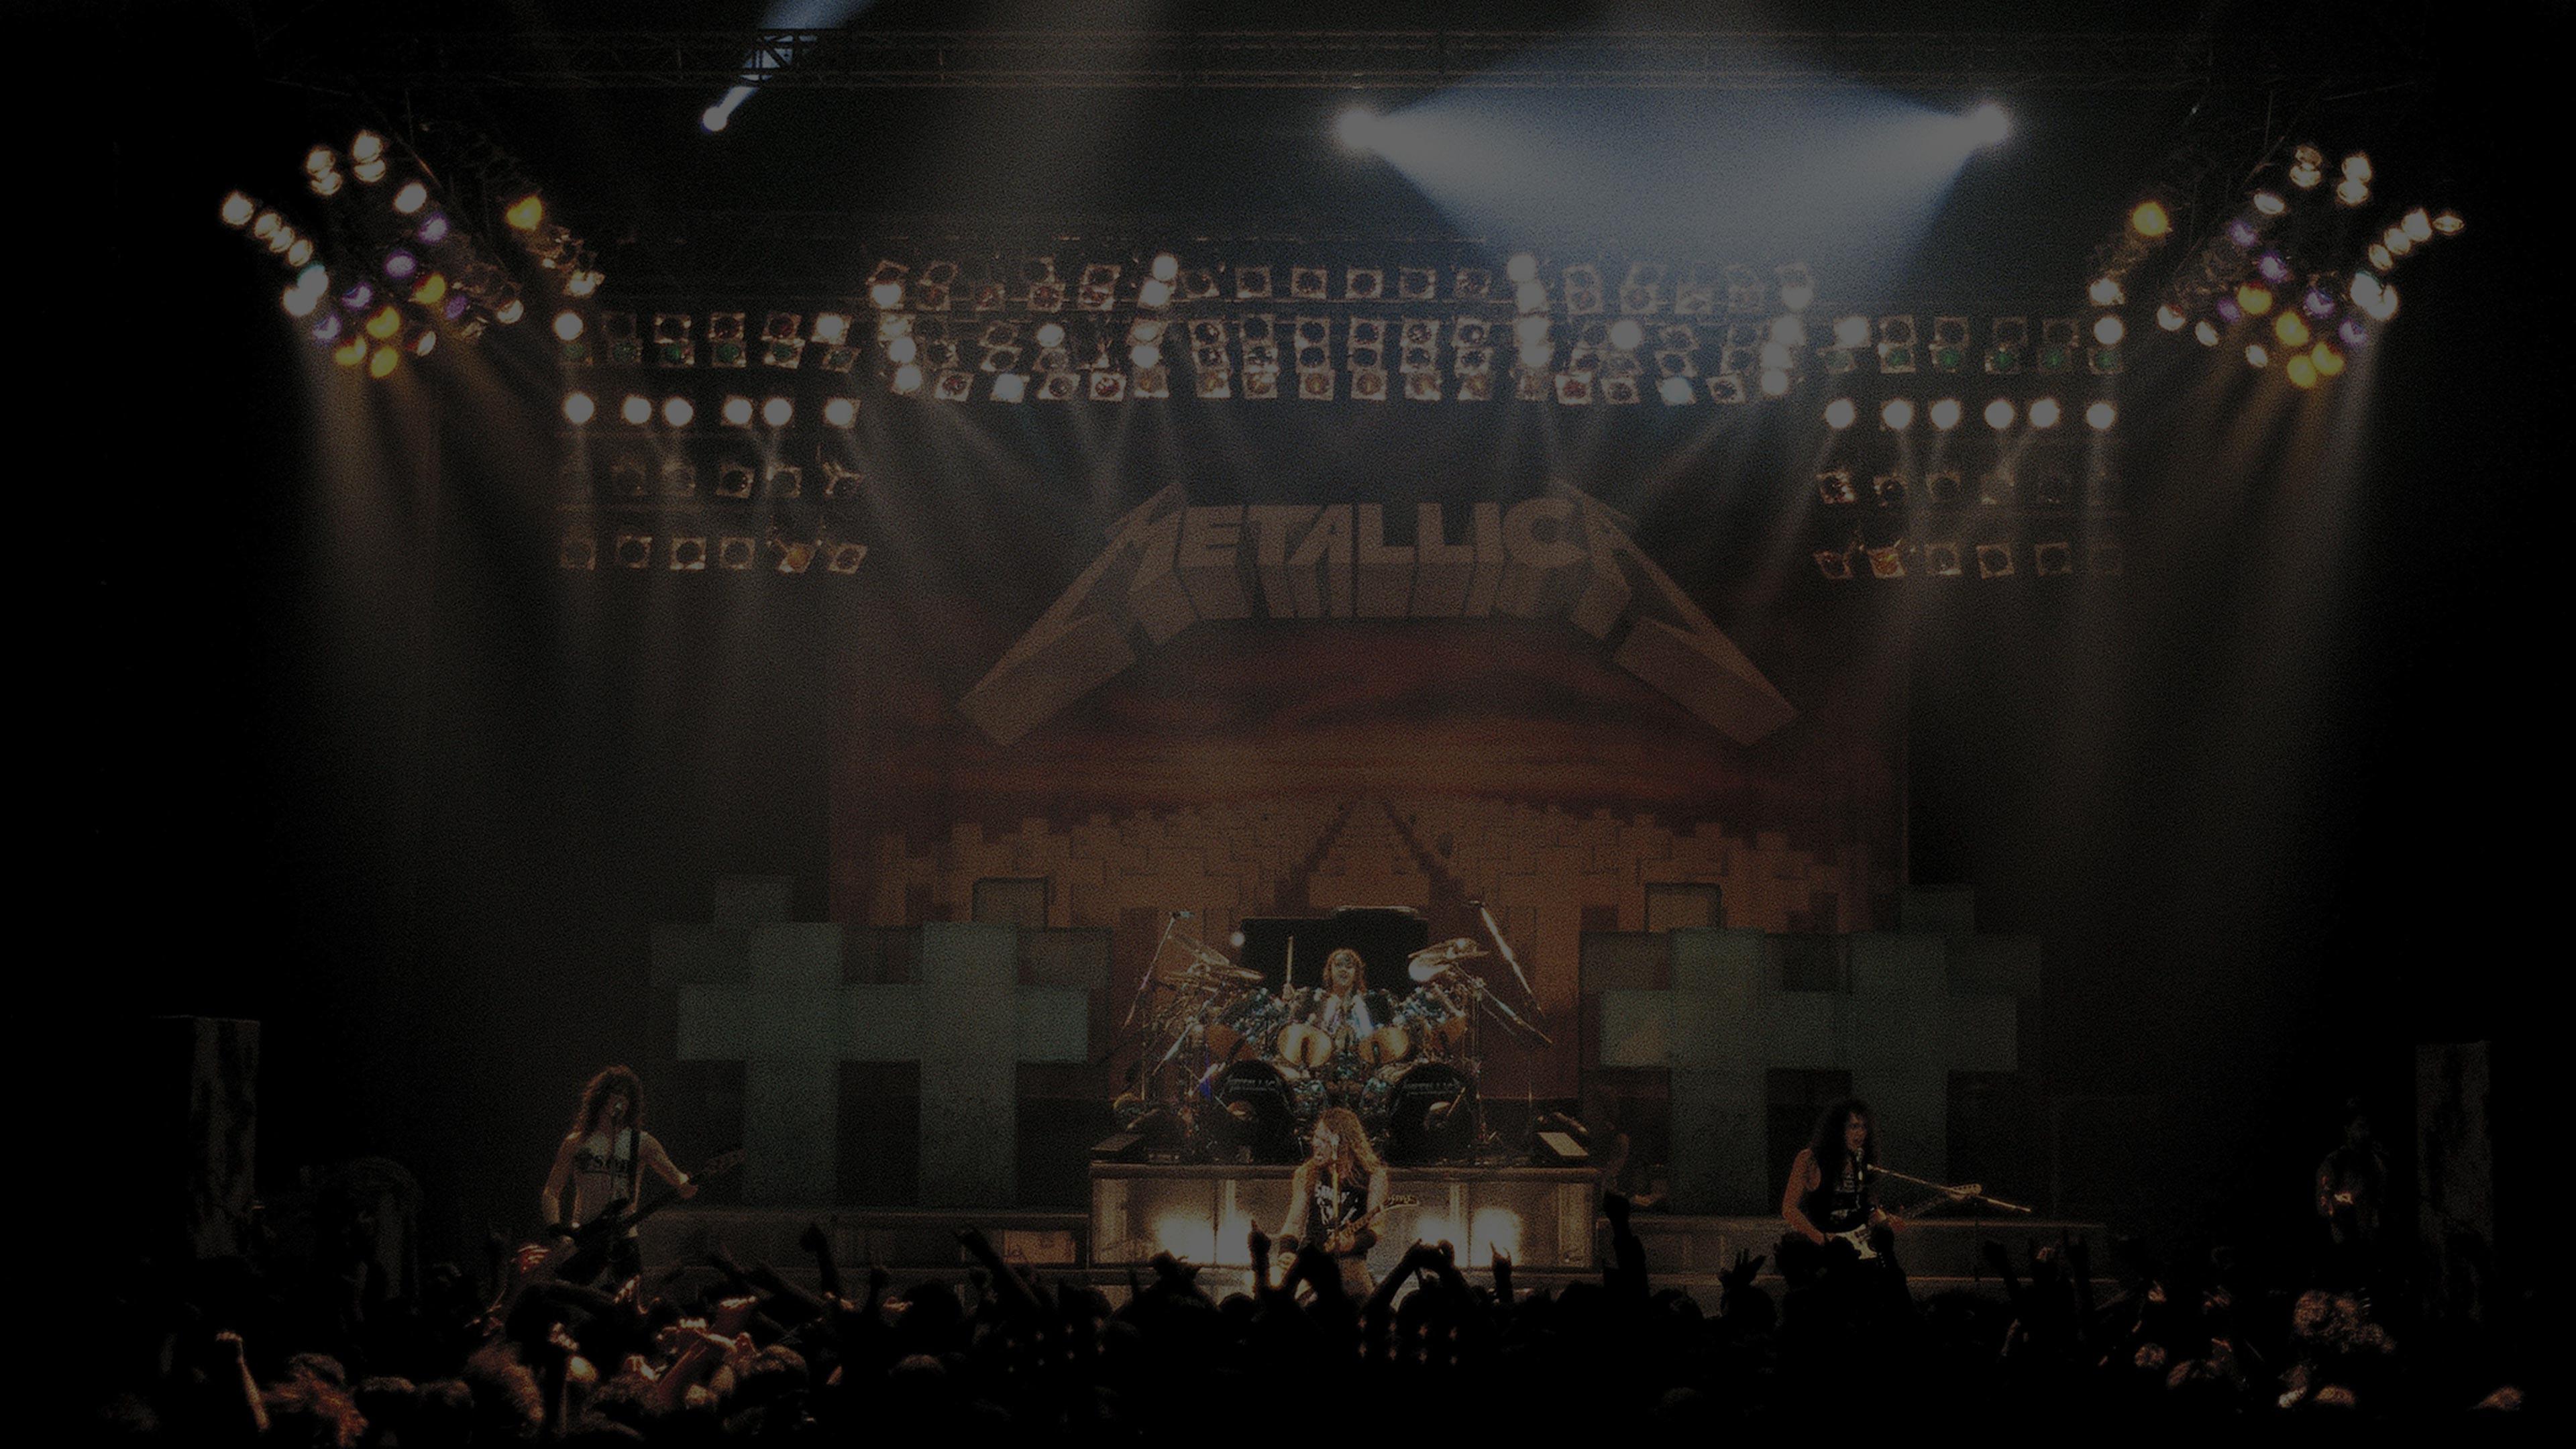 Metallica at Saskatchewan Centre of the Arts in Regina, SK, Canada on December 14, 1986